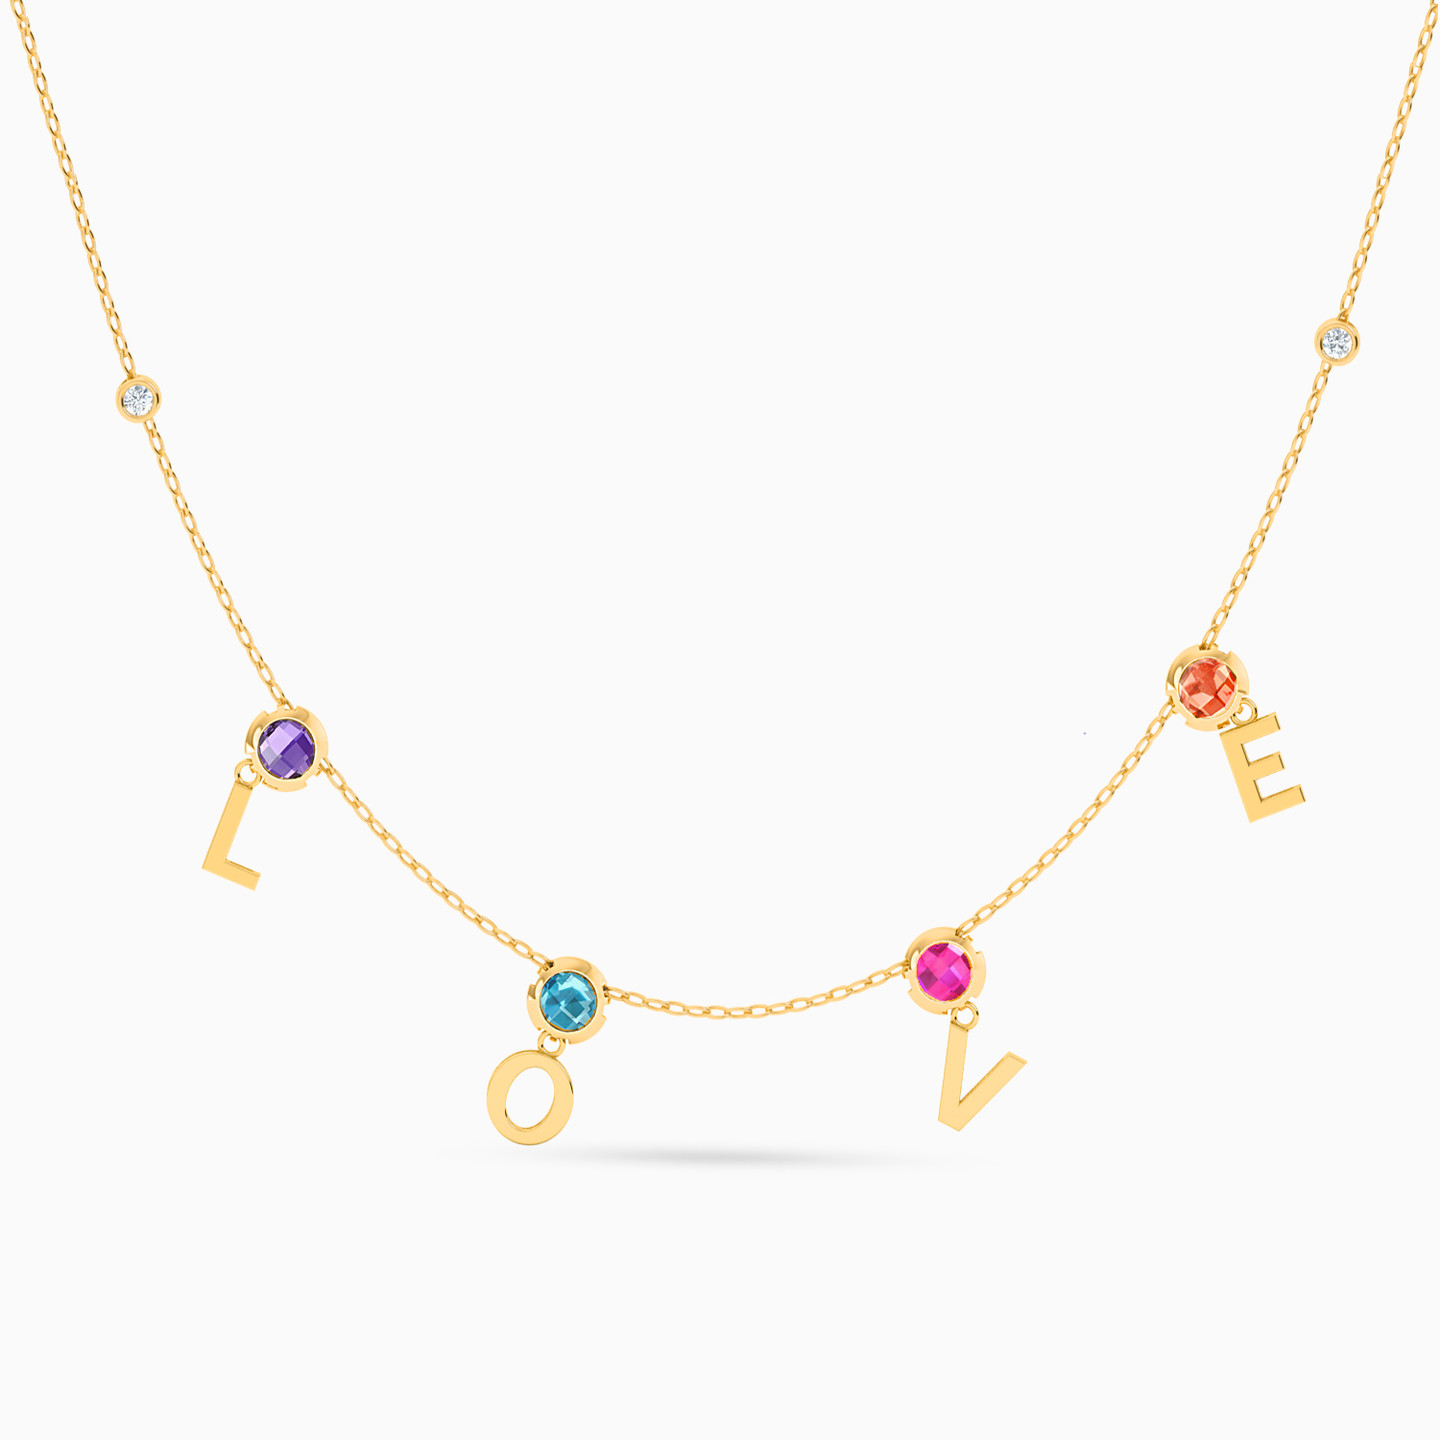 18K Gold Diamond & Colored Stones Chain Necklace